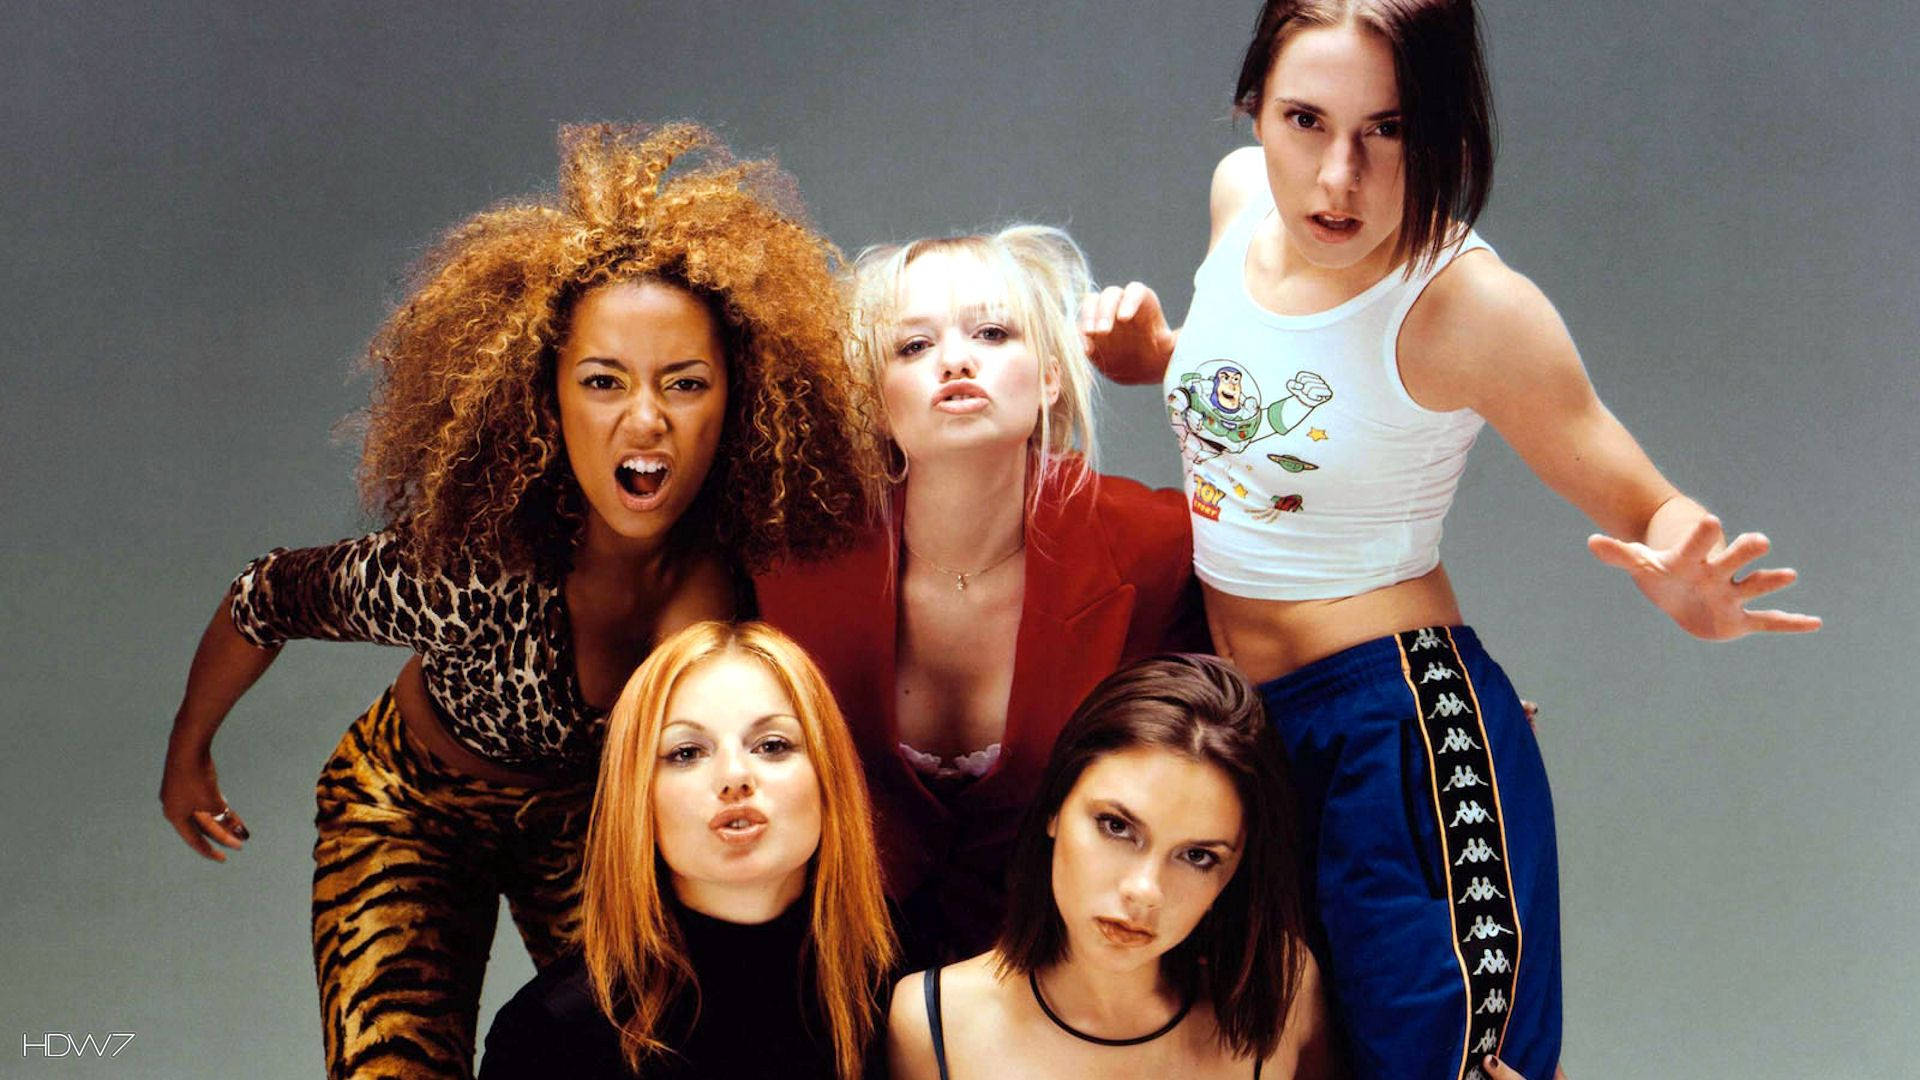 Spice Girls Wallpaper